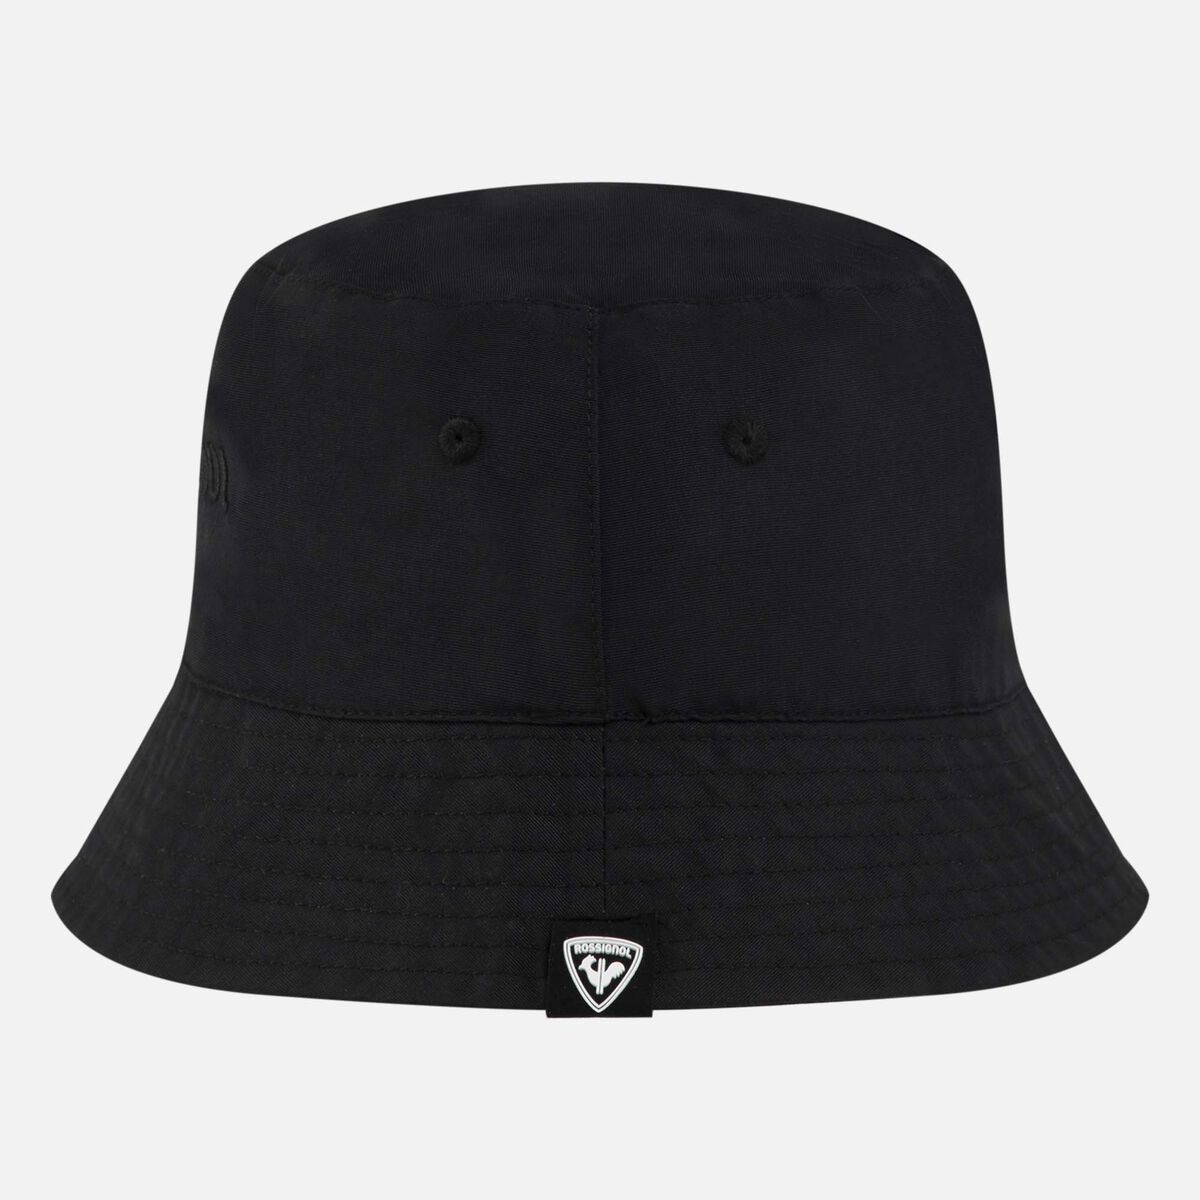 Rossignol Unisex Bucket Hat Black